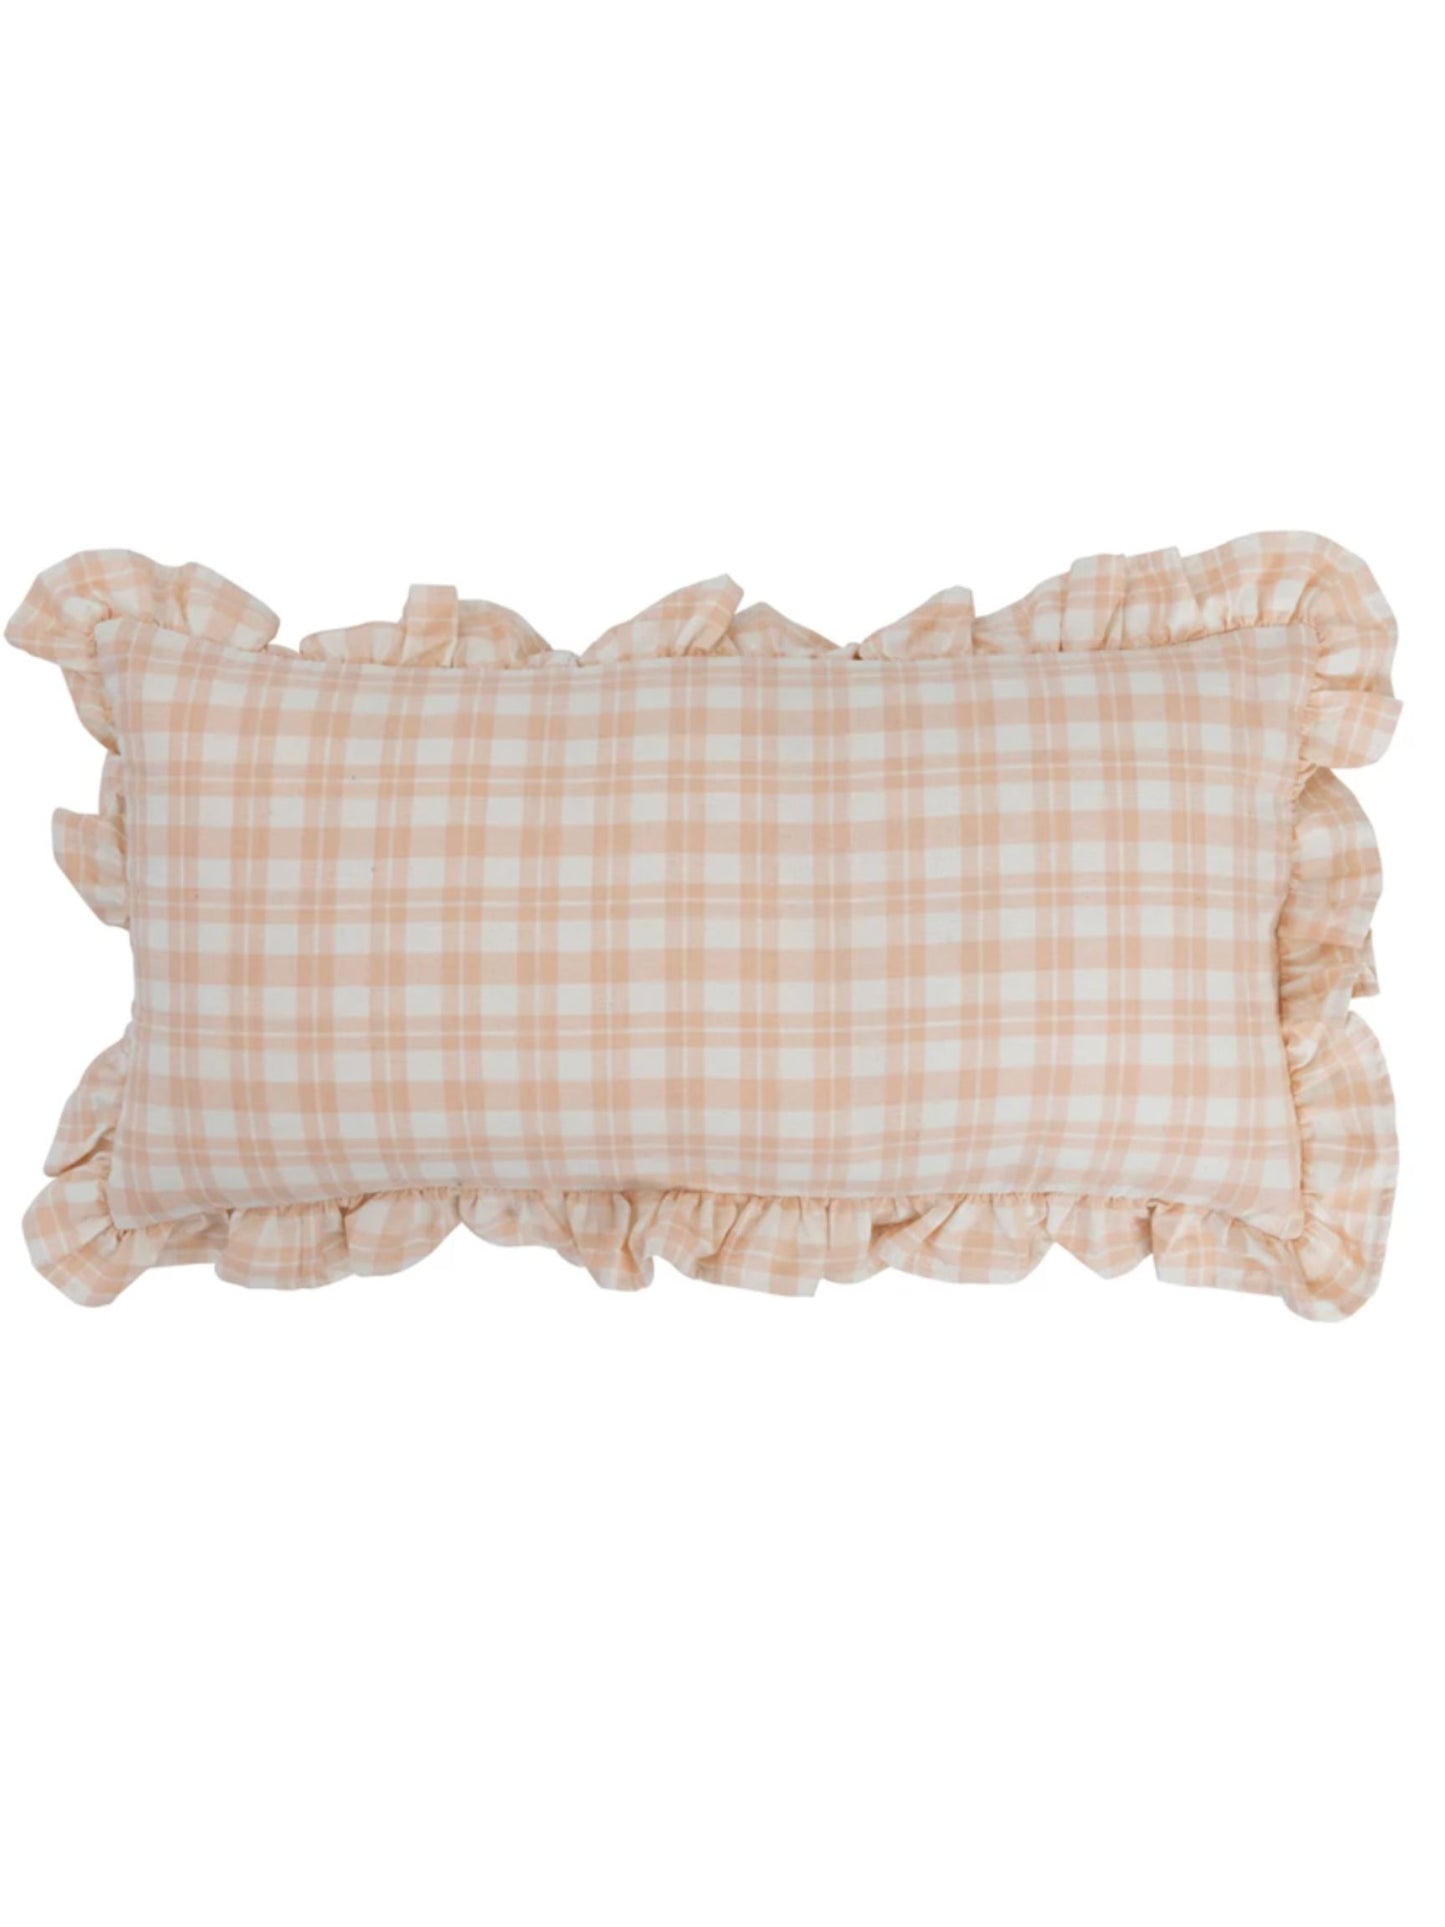 Cotton Lumbar Plaid Pillow with Ruffle - Blush